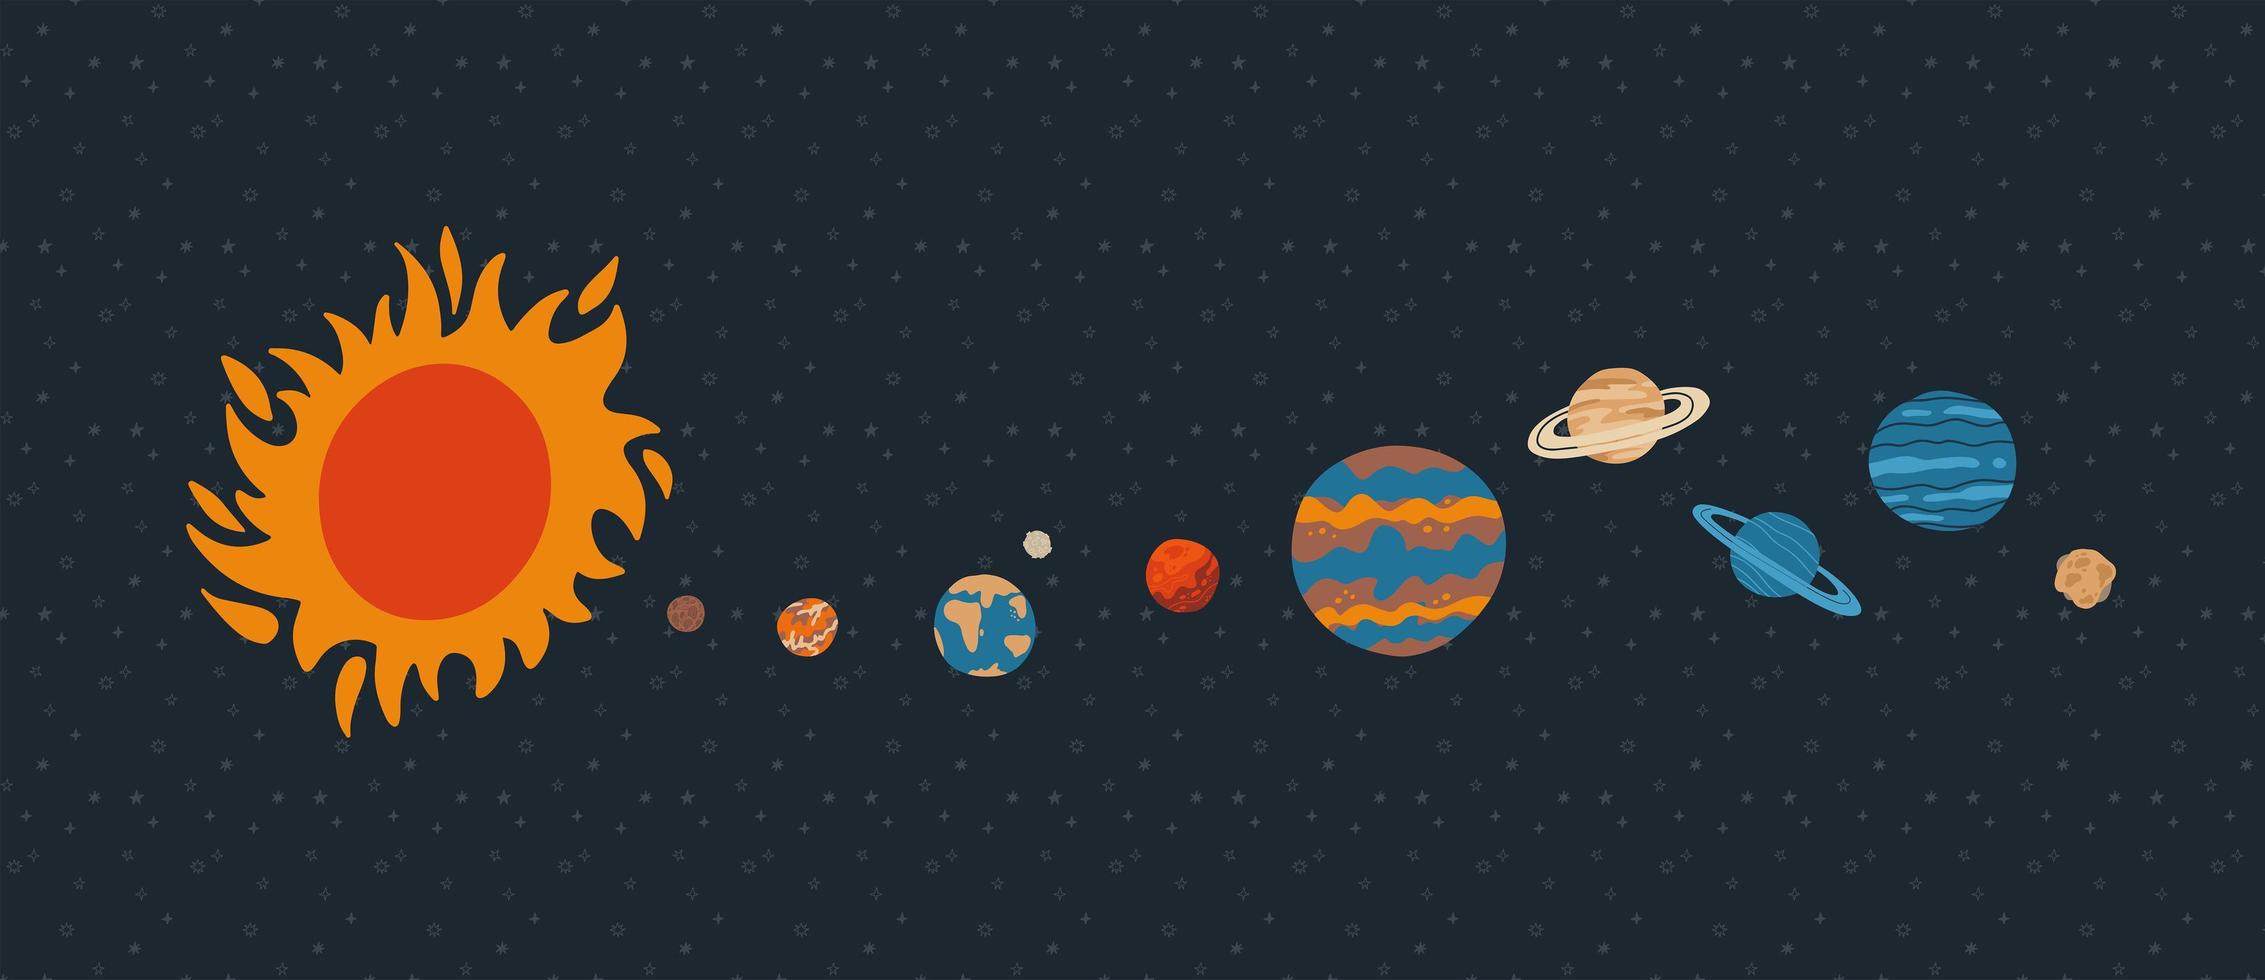 sistema solar con órbitas solares y planetas sobre fondo azul oscuro. ilustración vectorial plana dibujada a mano vector